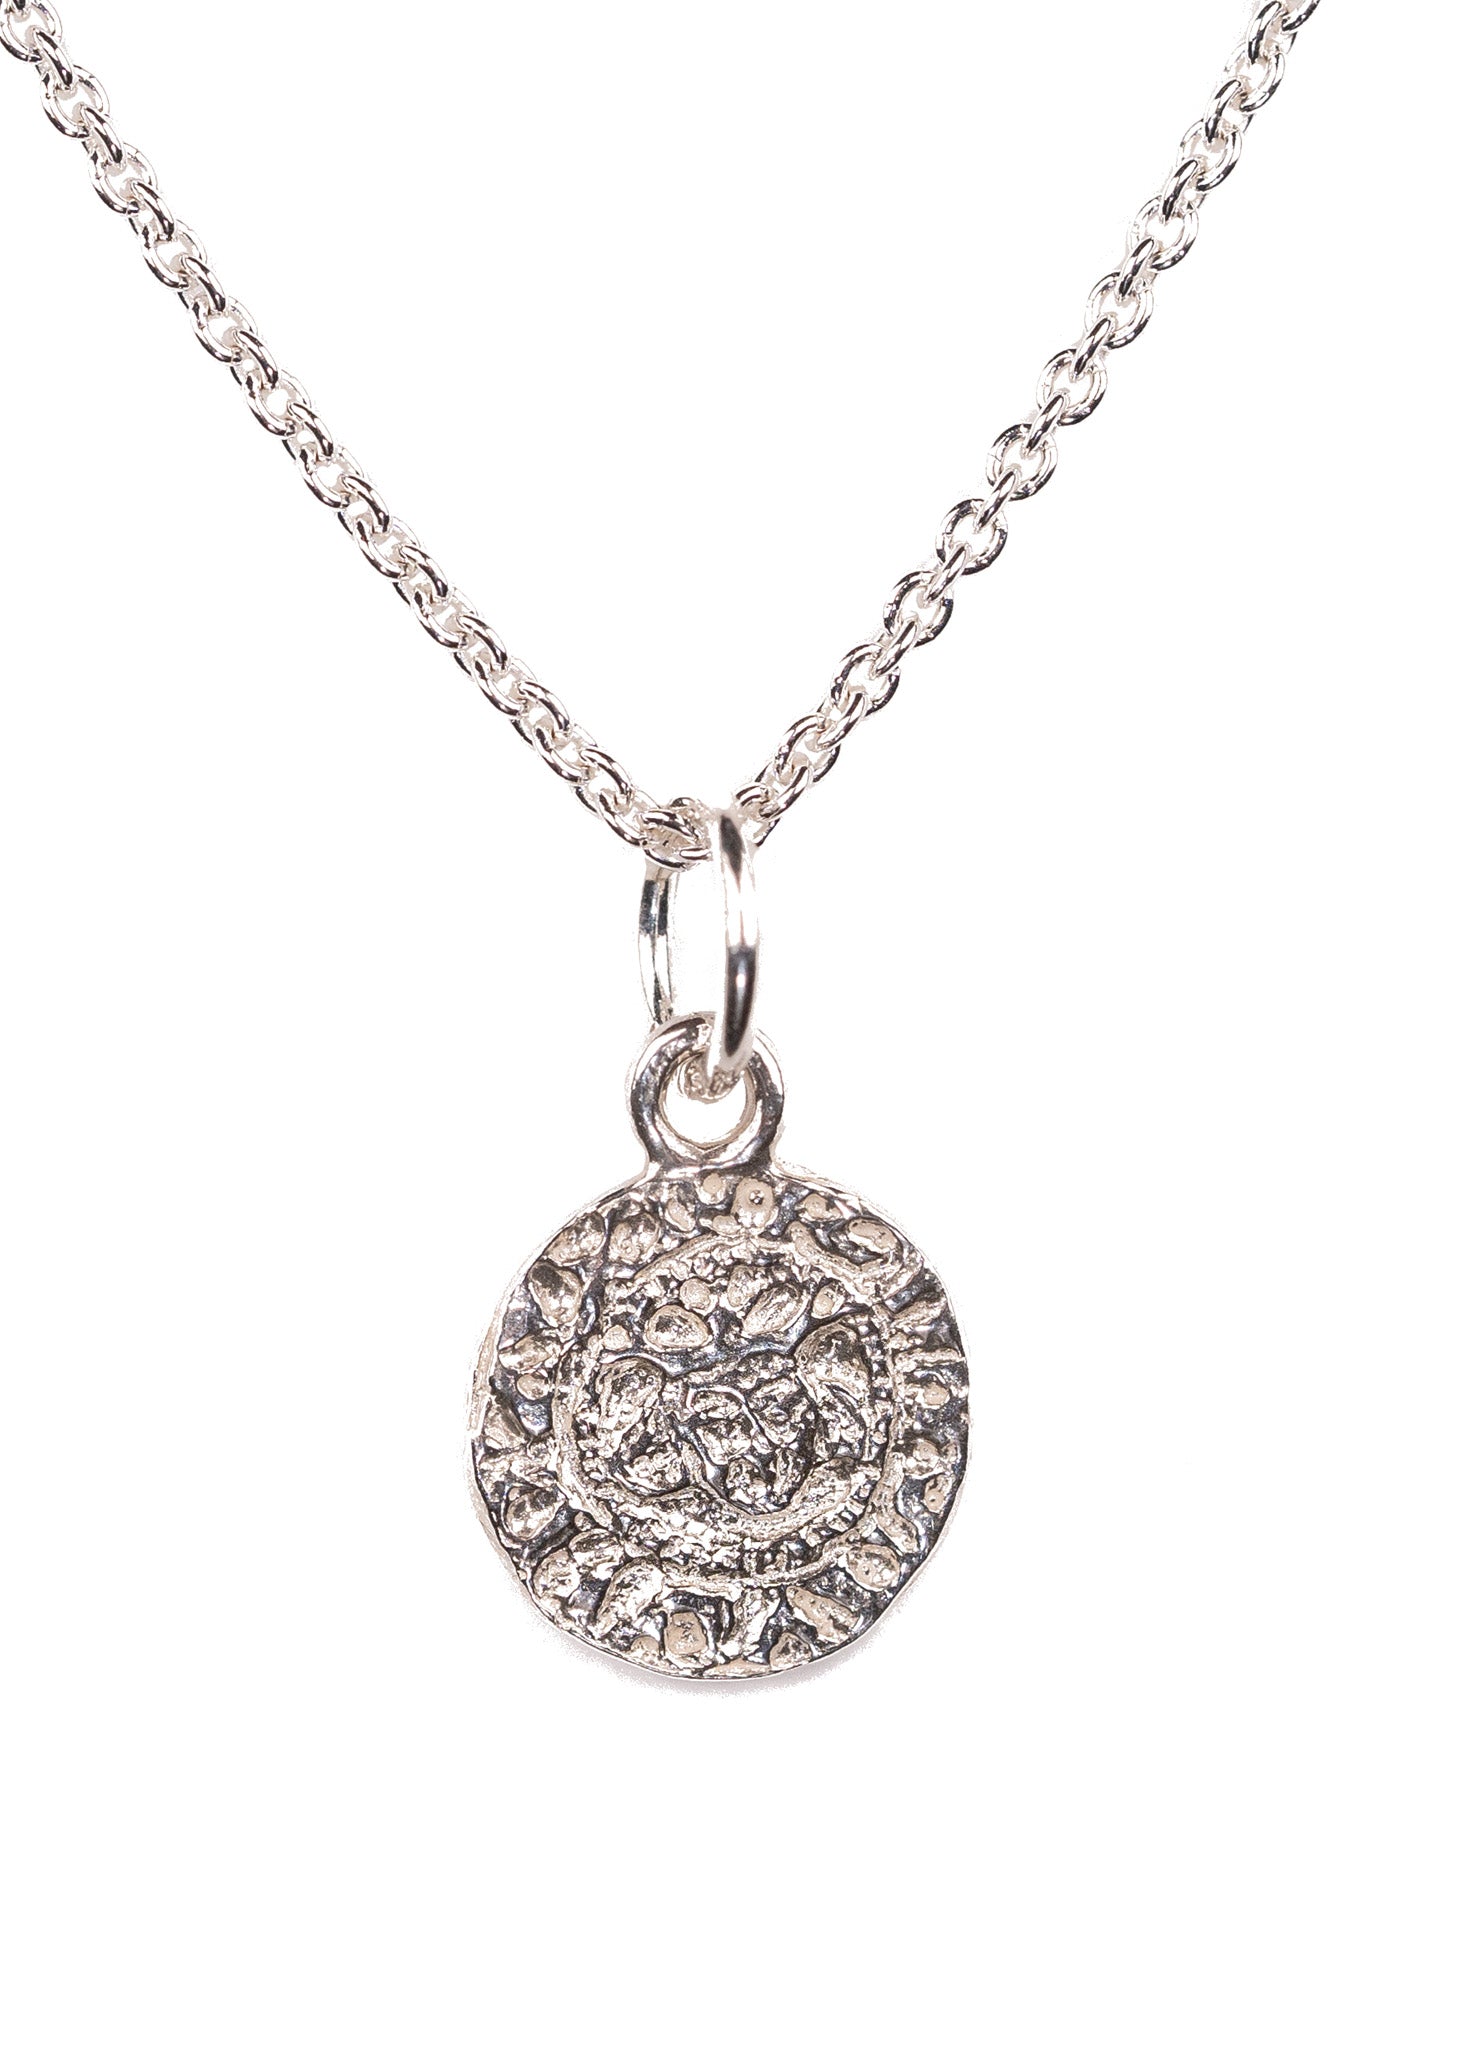 Quarterpenny necklace in silver